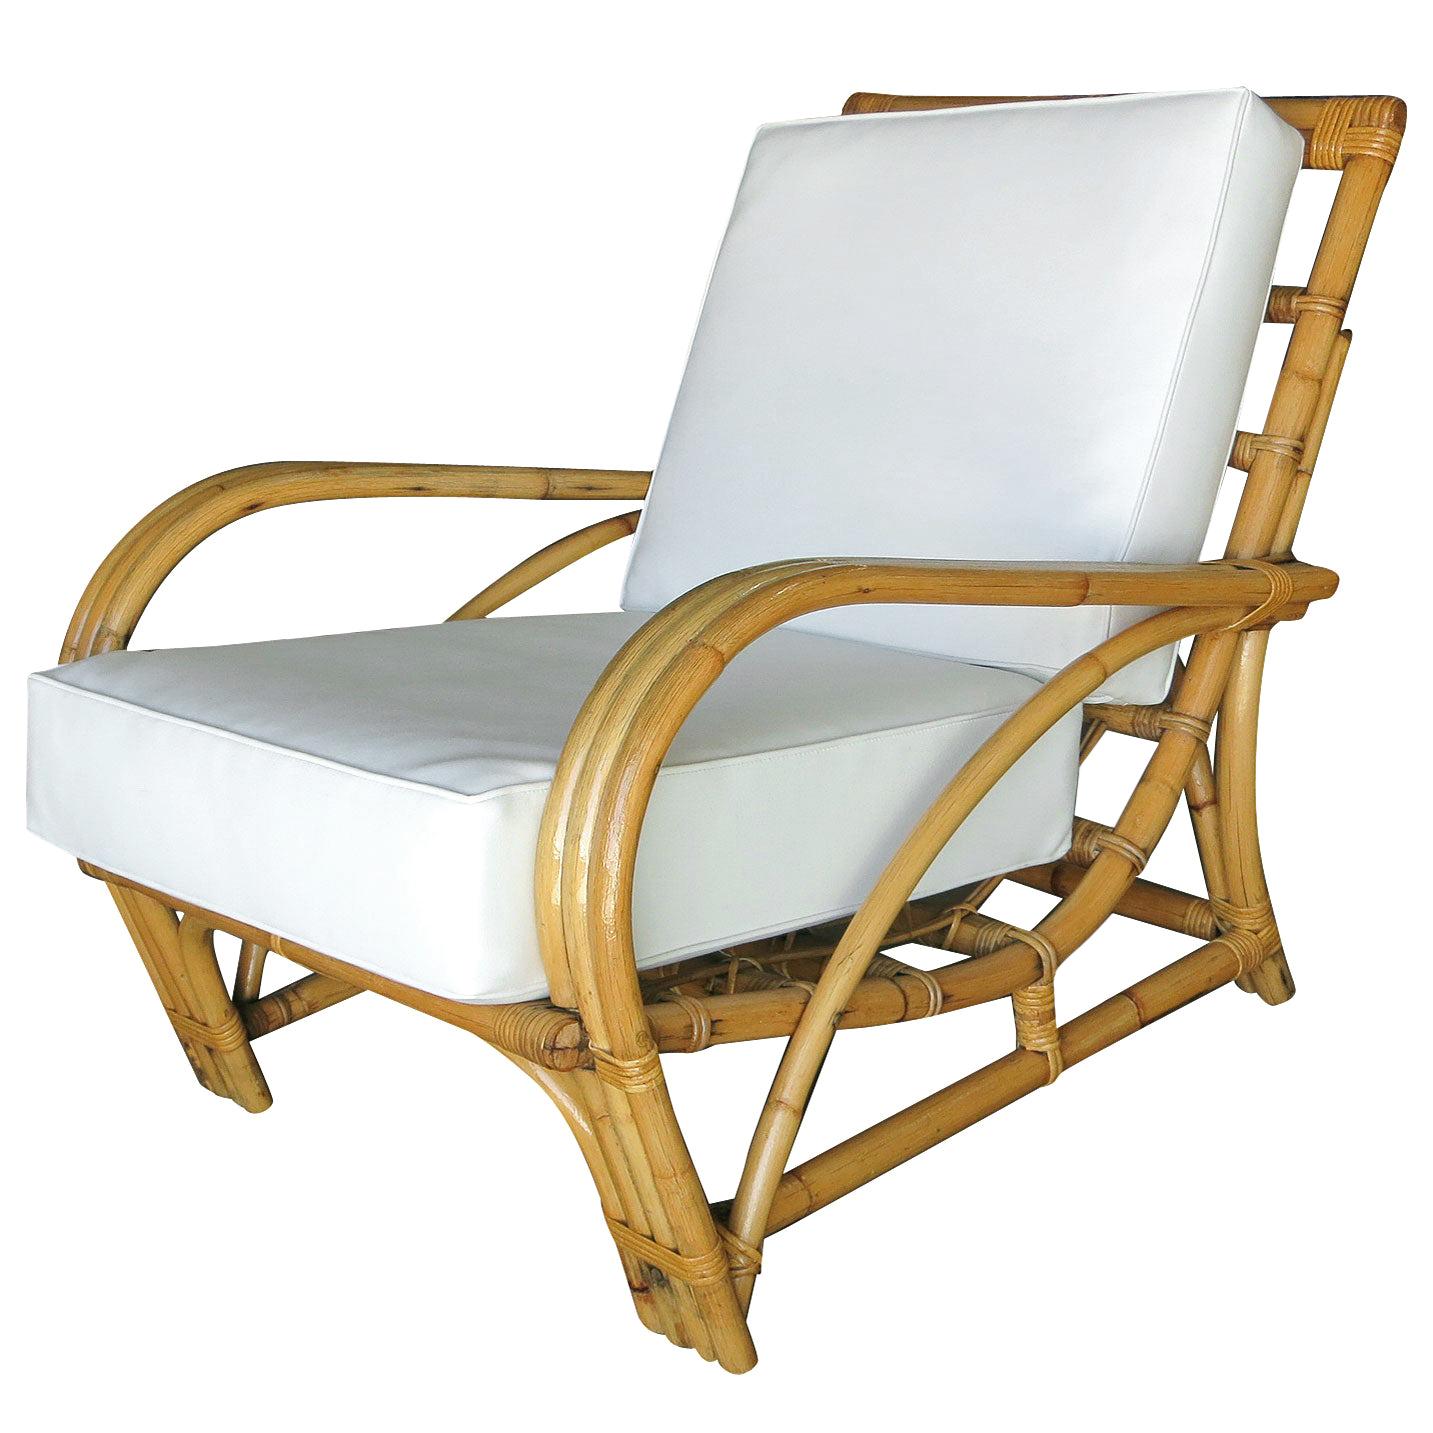 Restored Three-Strand "1940s Transition" Rattan Lounge Chair